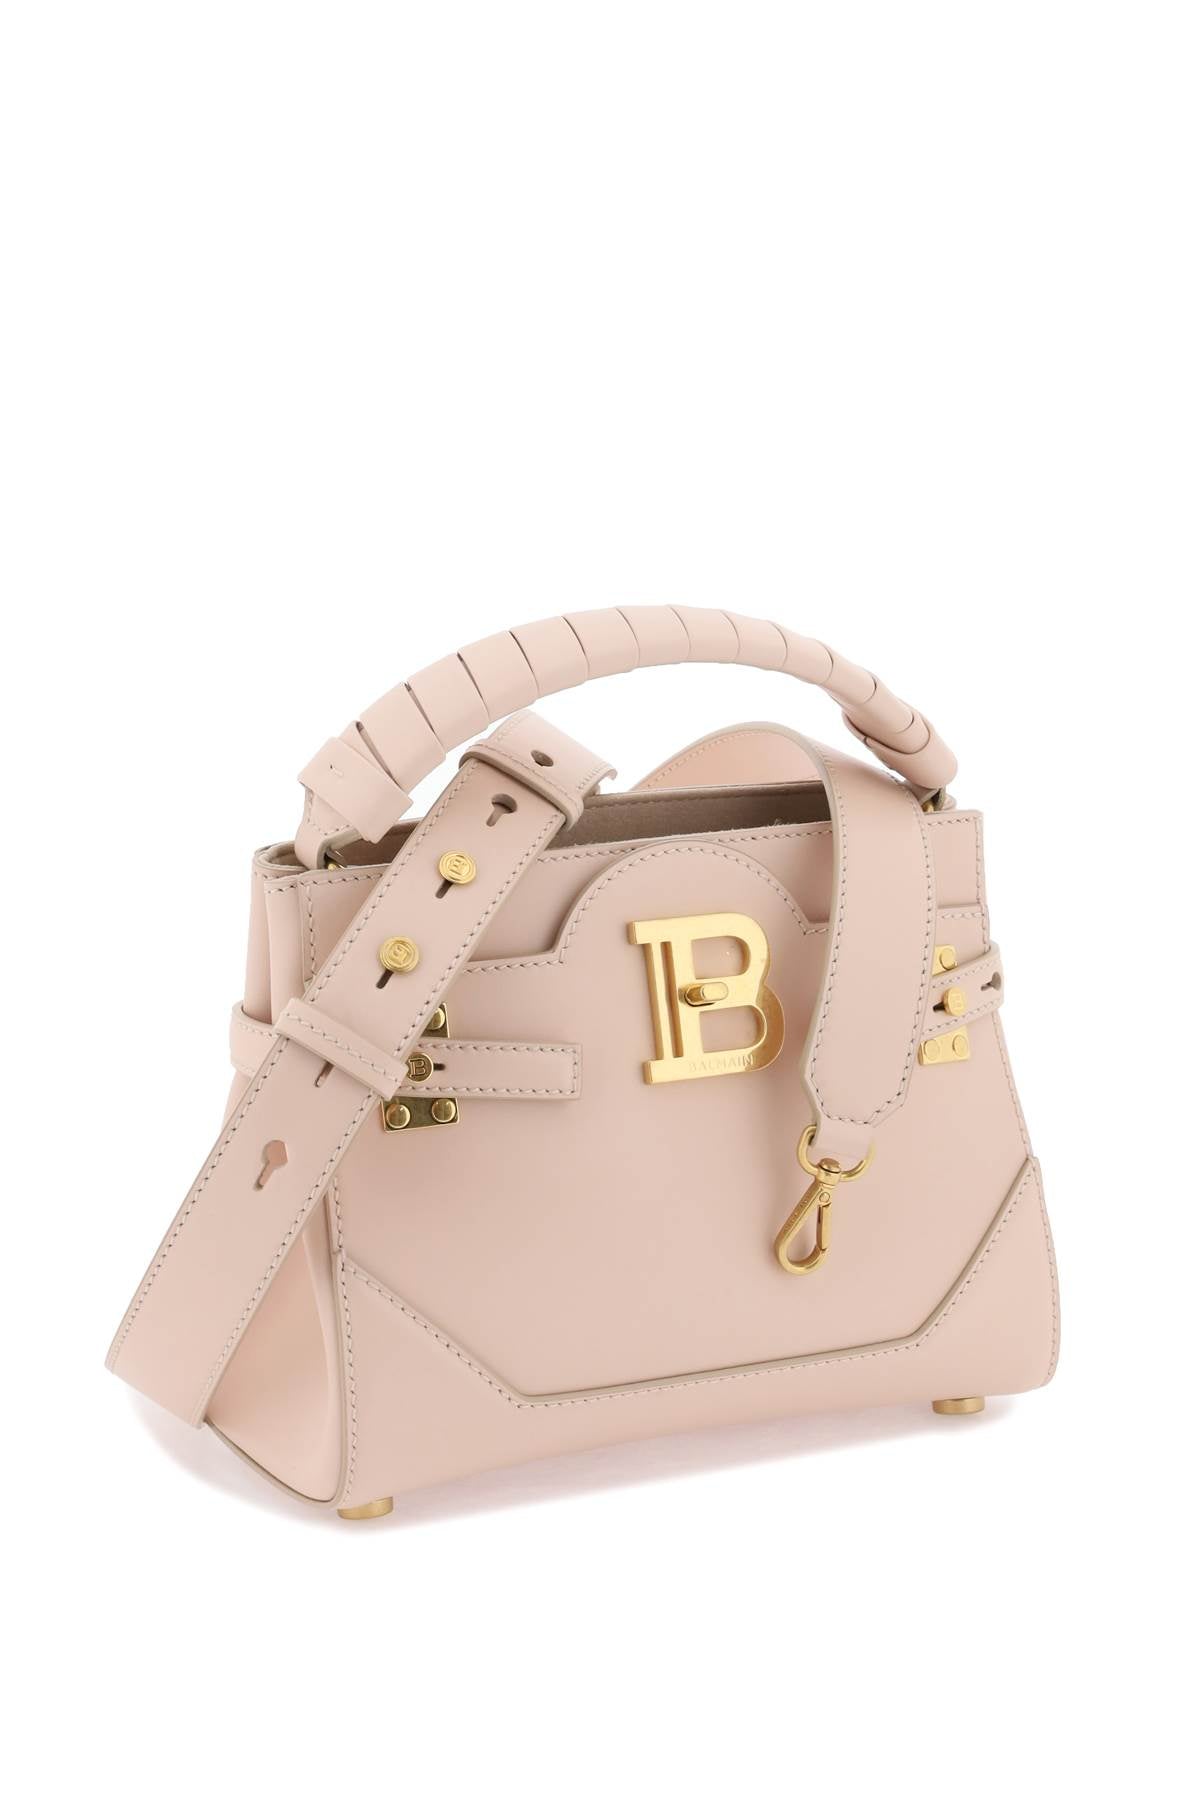 Balmain B Buzz 22 Top Handle Handbag   Rosa